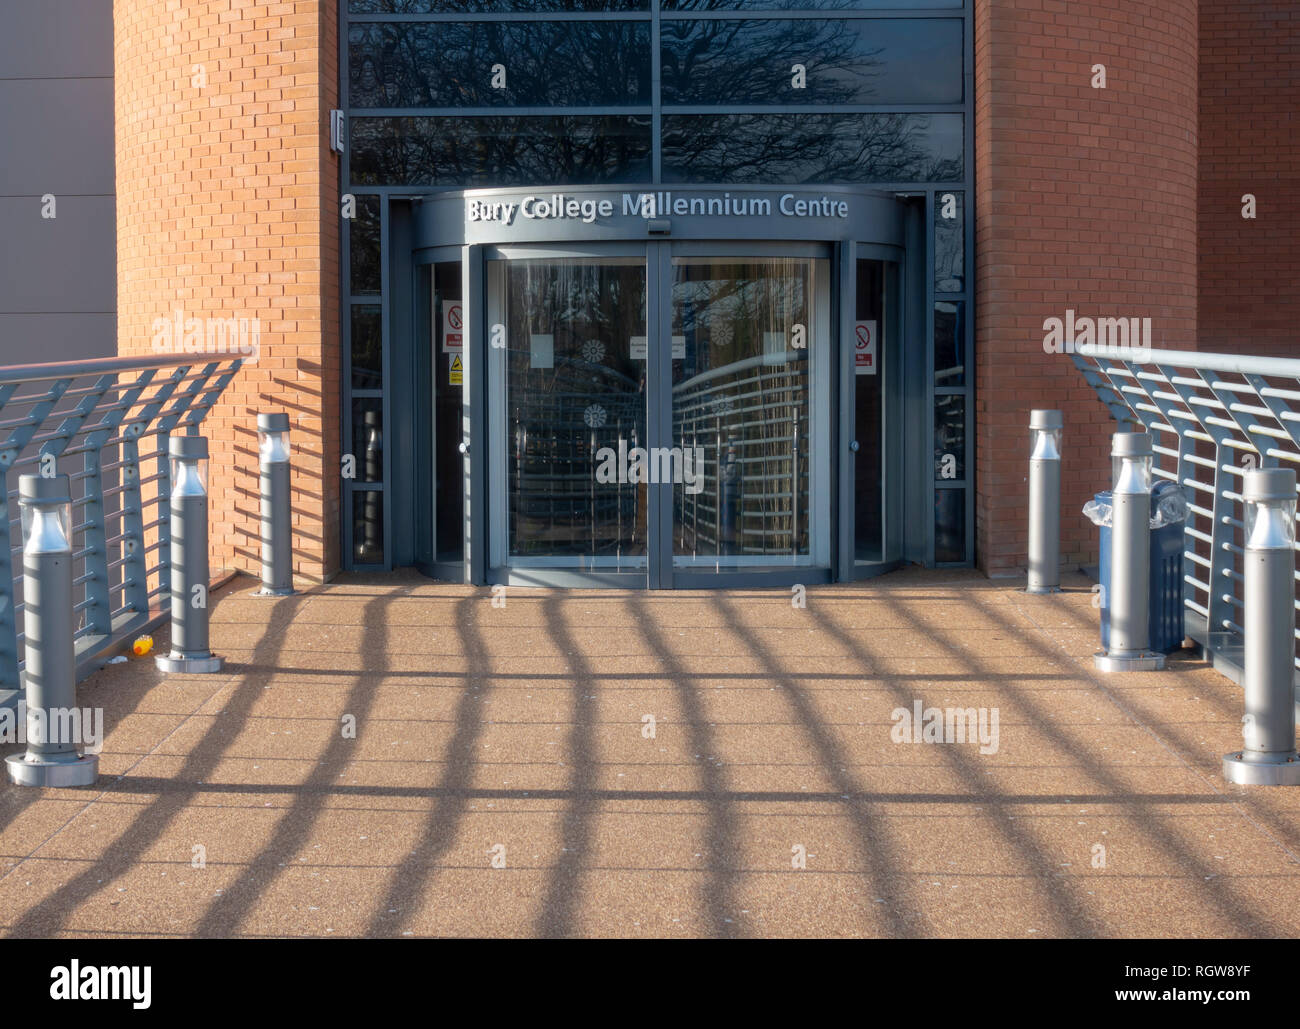 Entrance to Bury College Millennium Centre Stock Photo